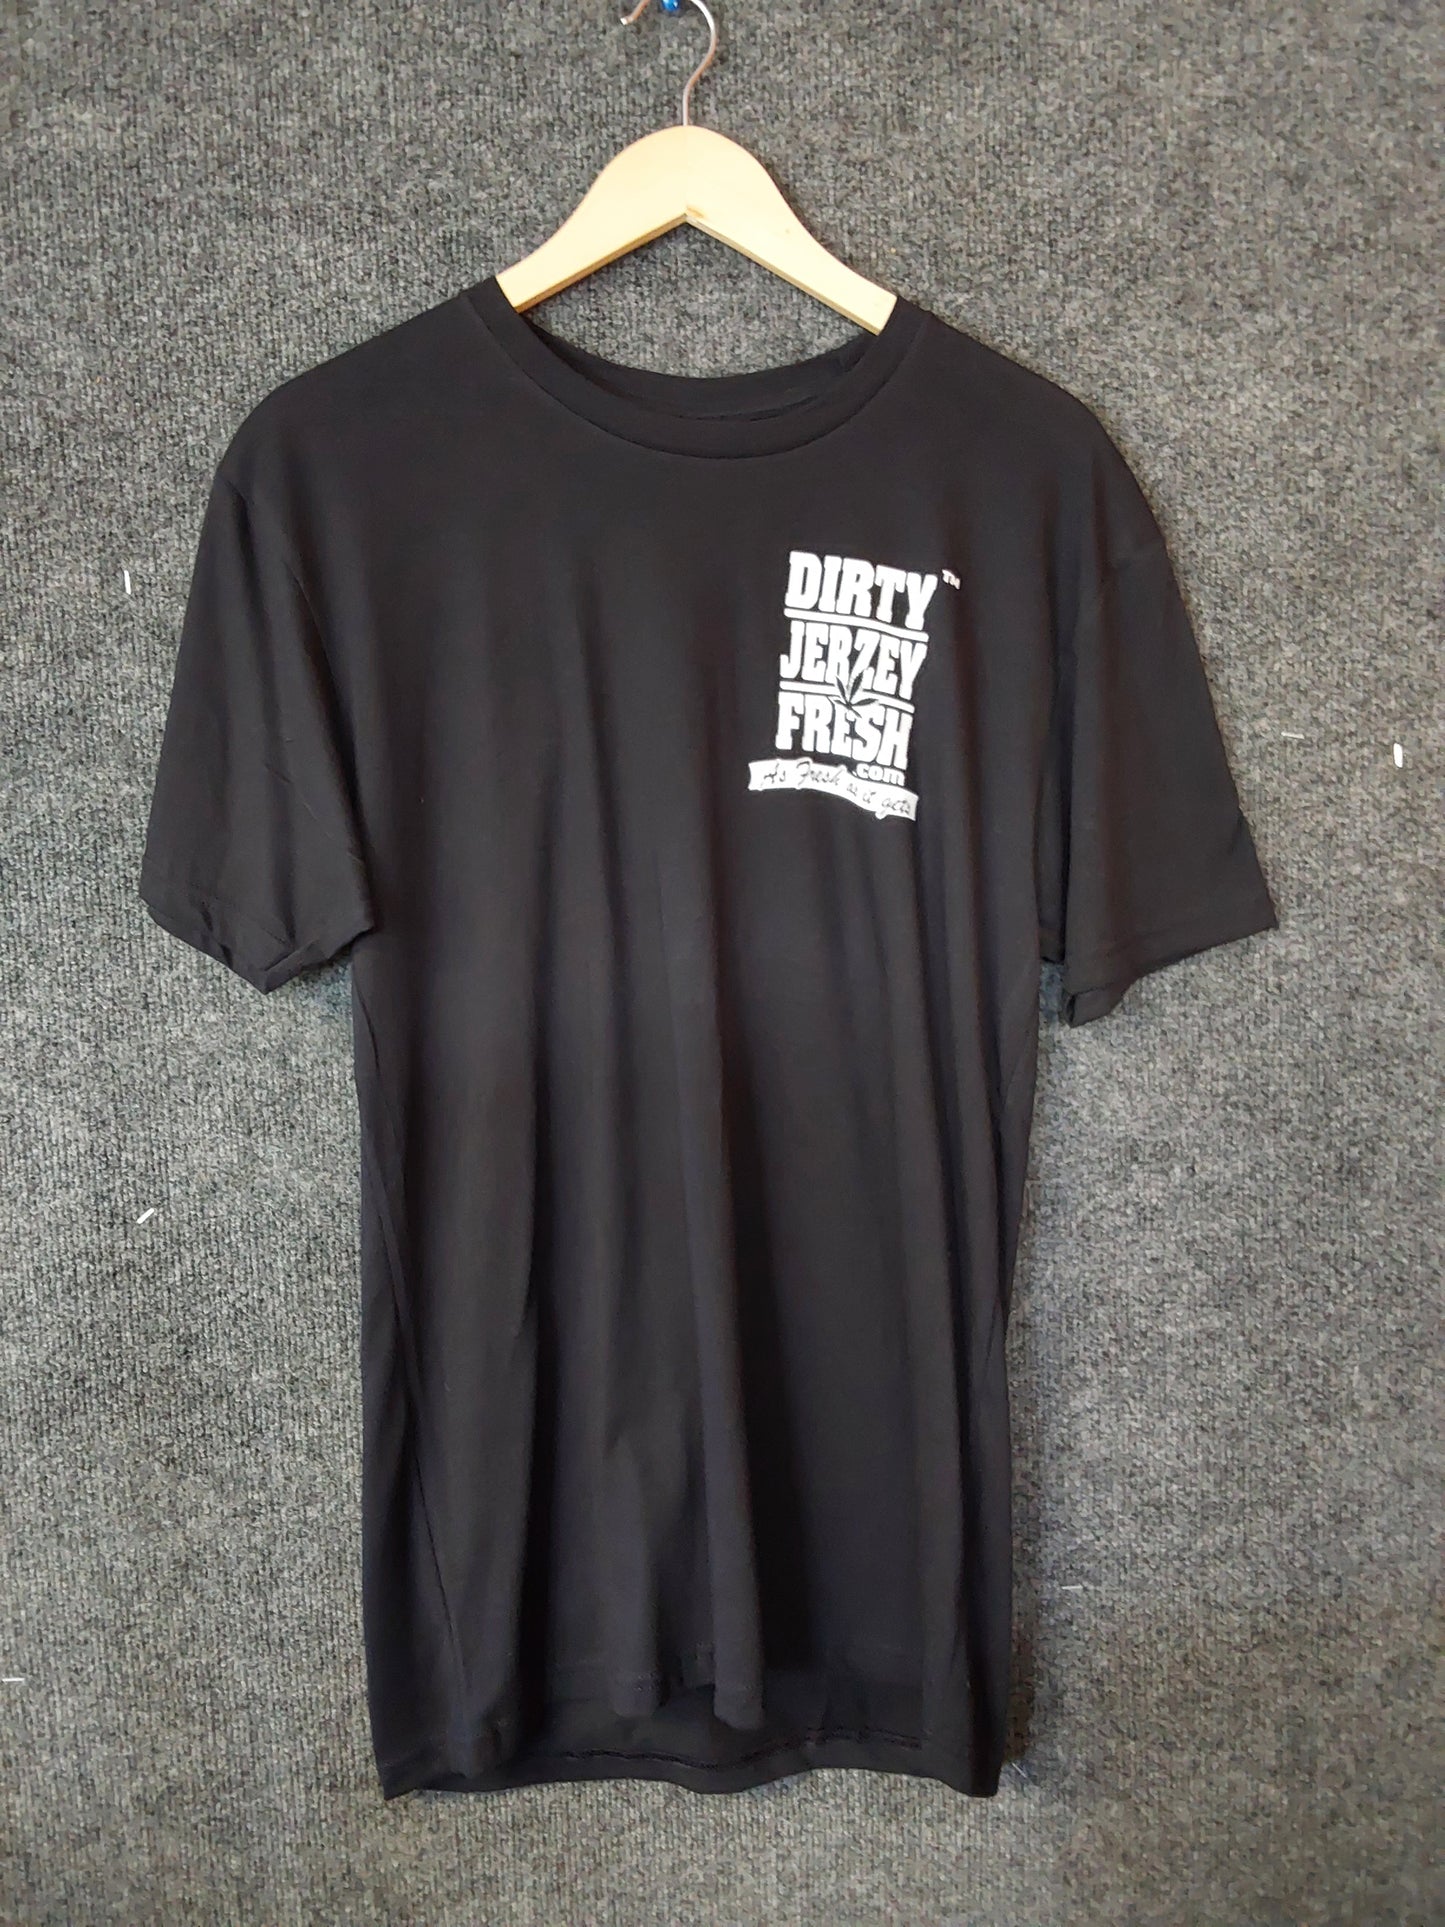 Dirty Jersey Fresh Black T-Shirt